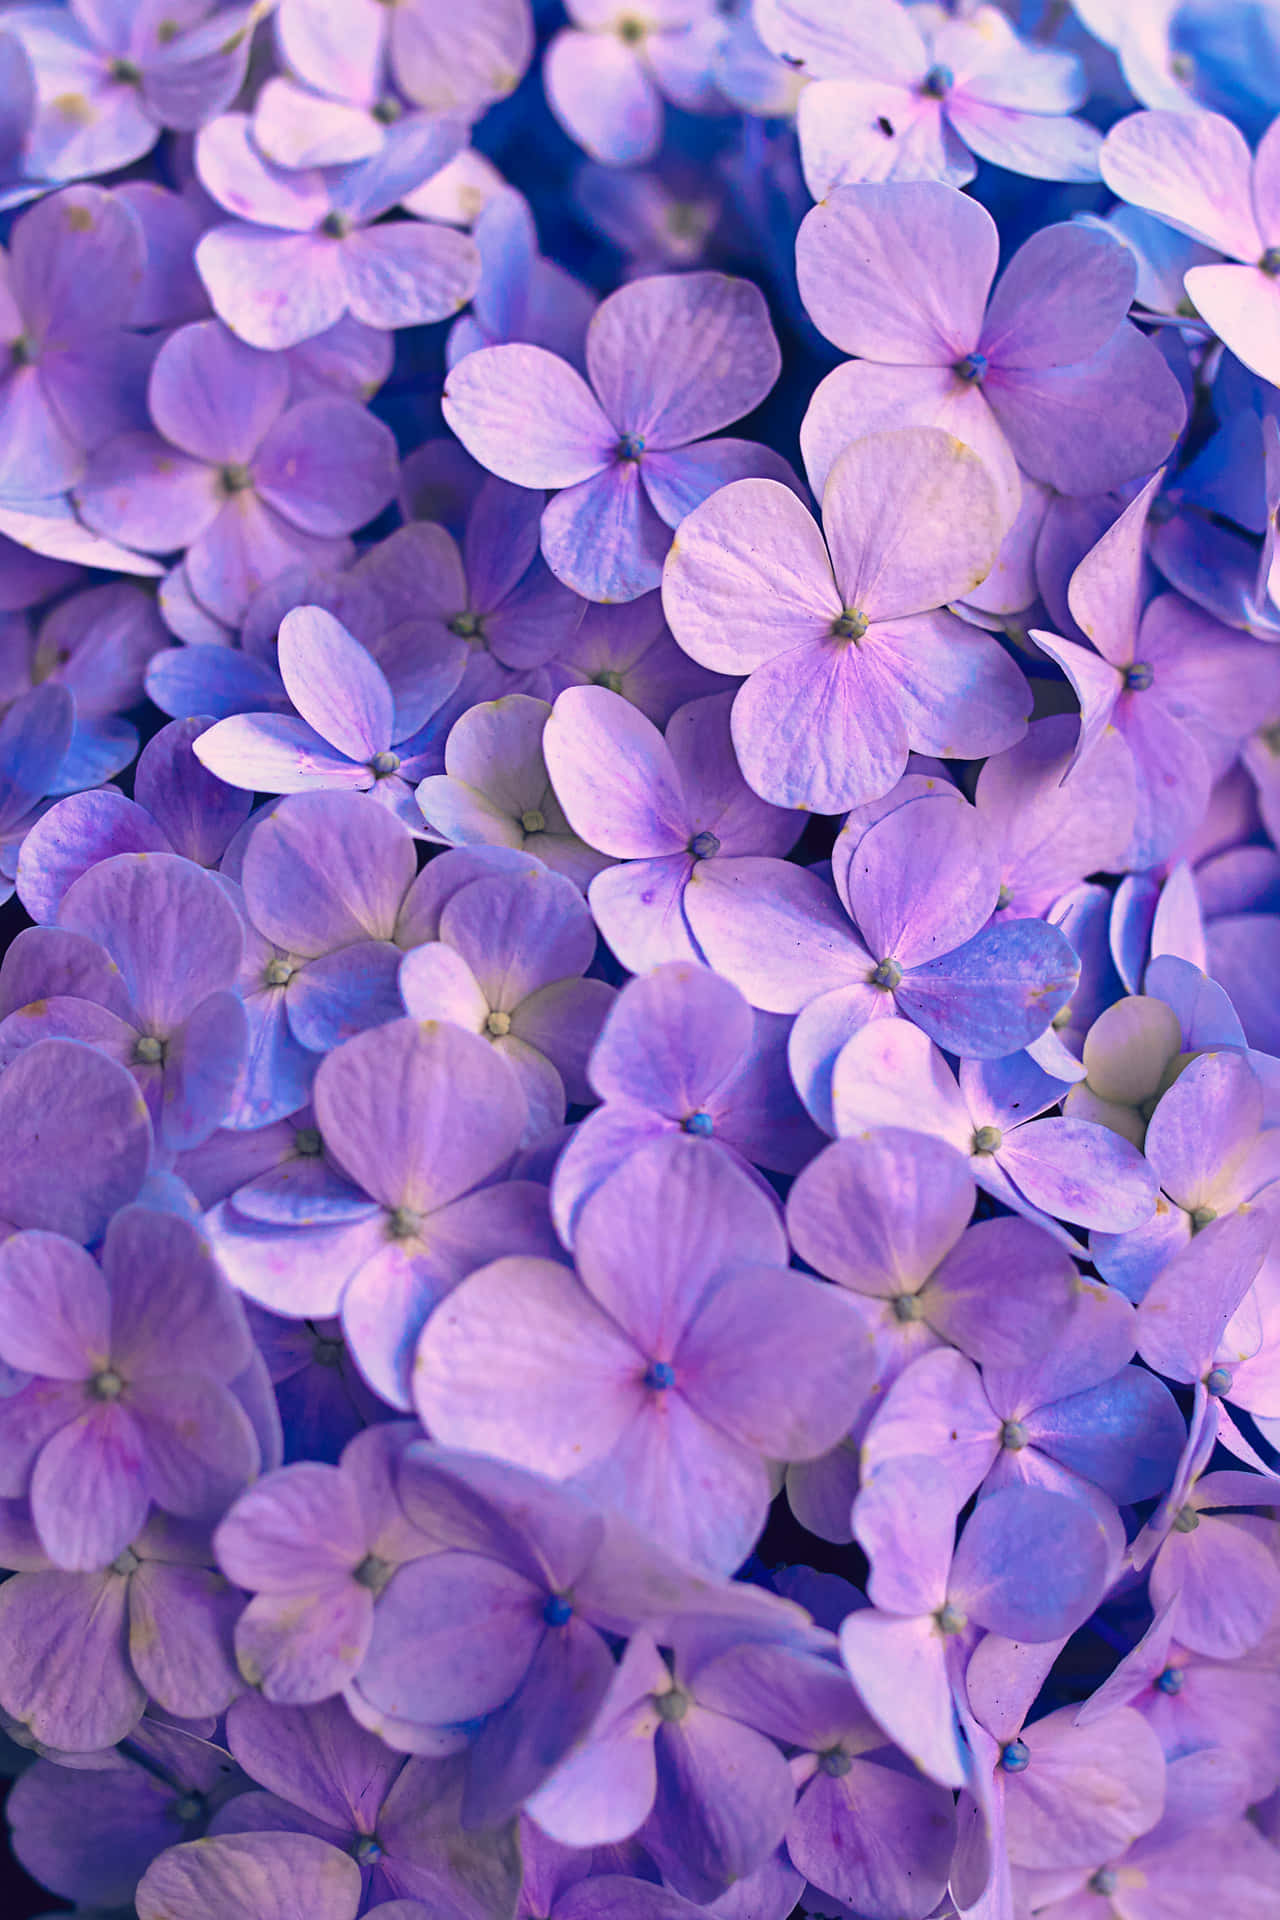 Pretty Purple Hydrangeas With Some Blue Petals